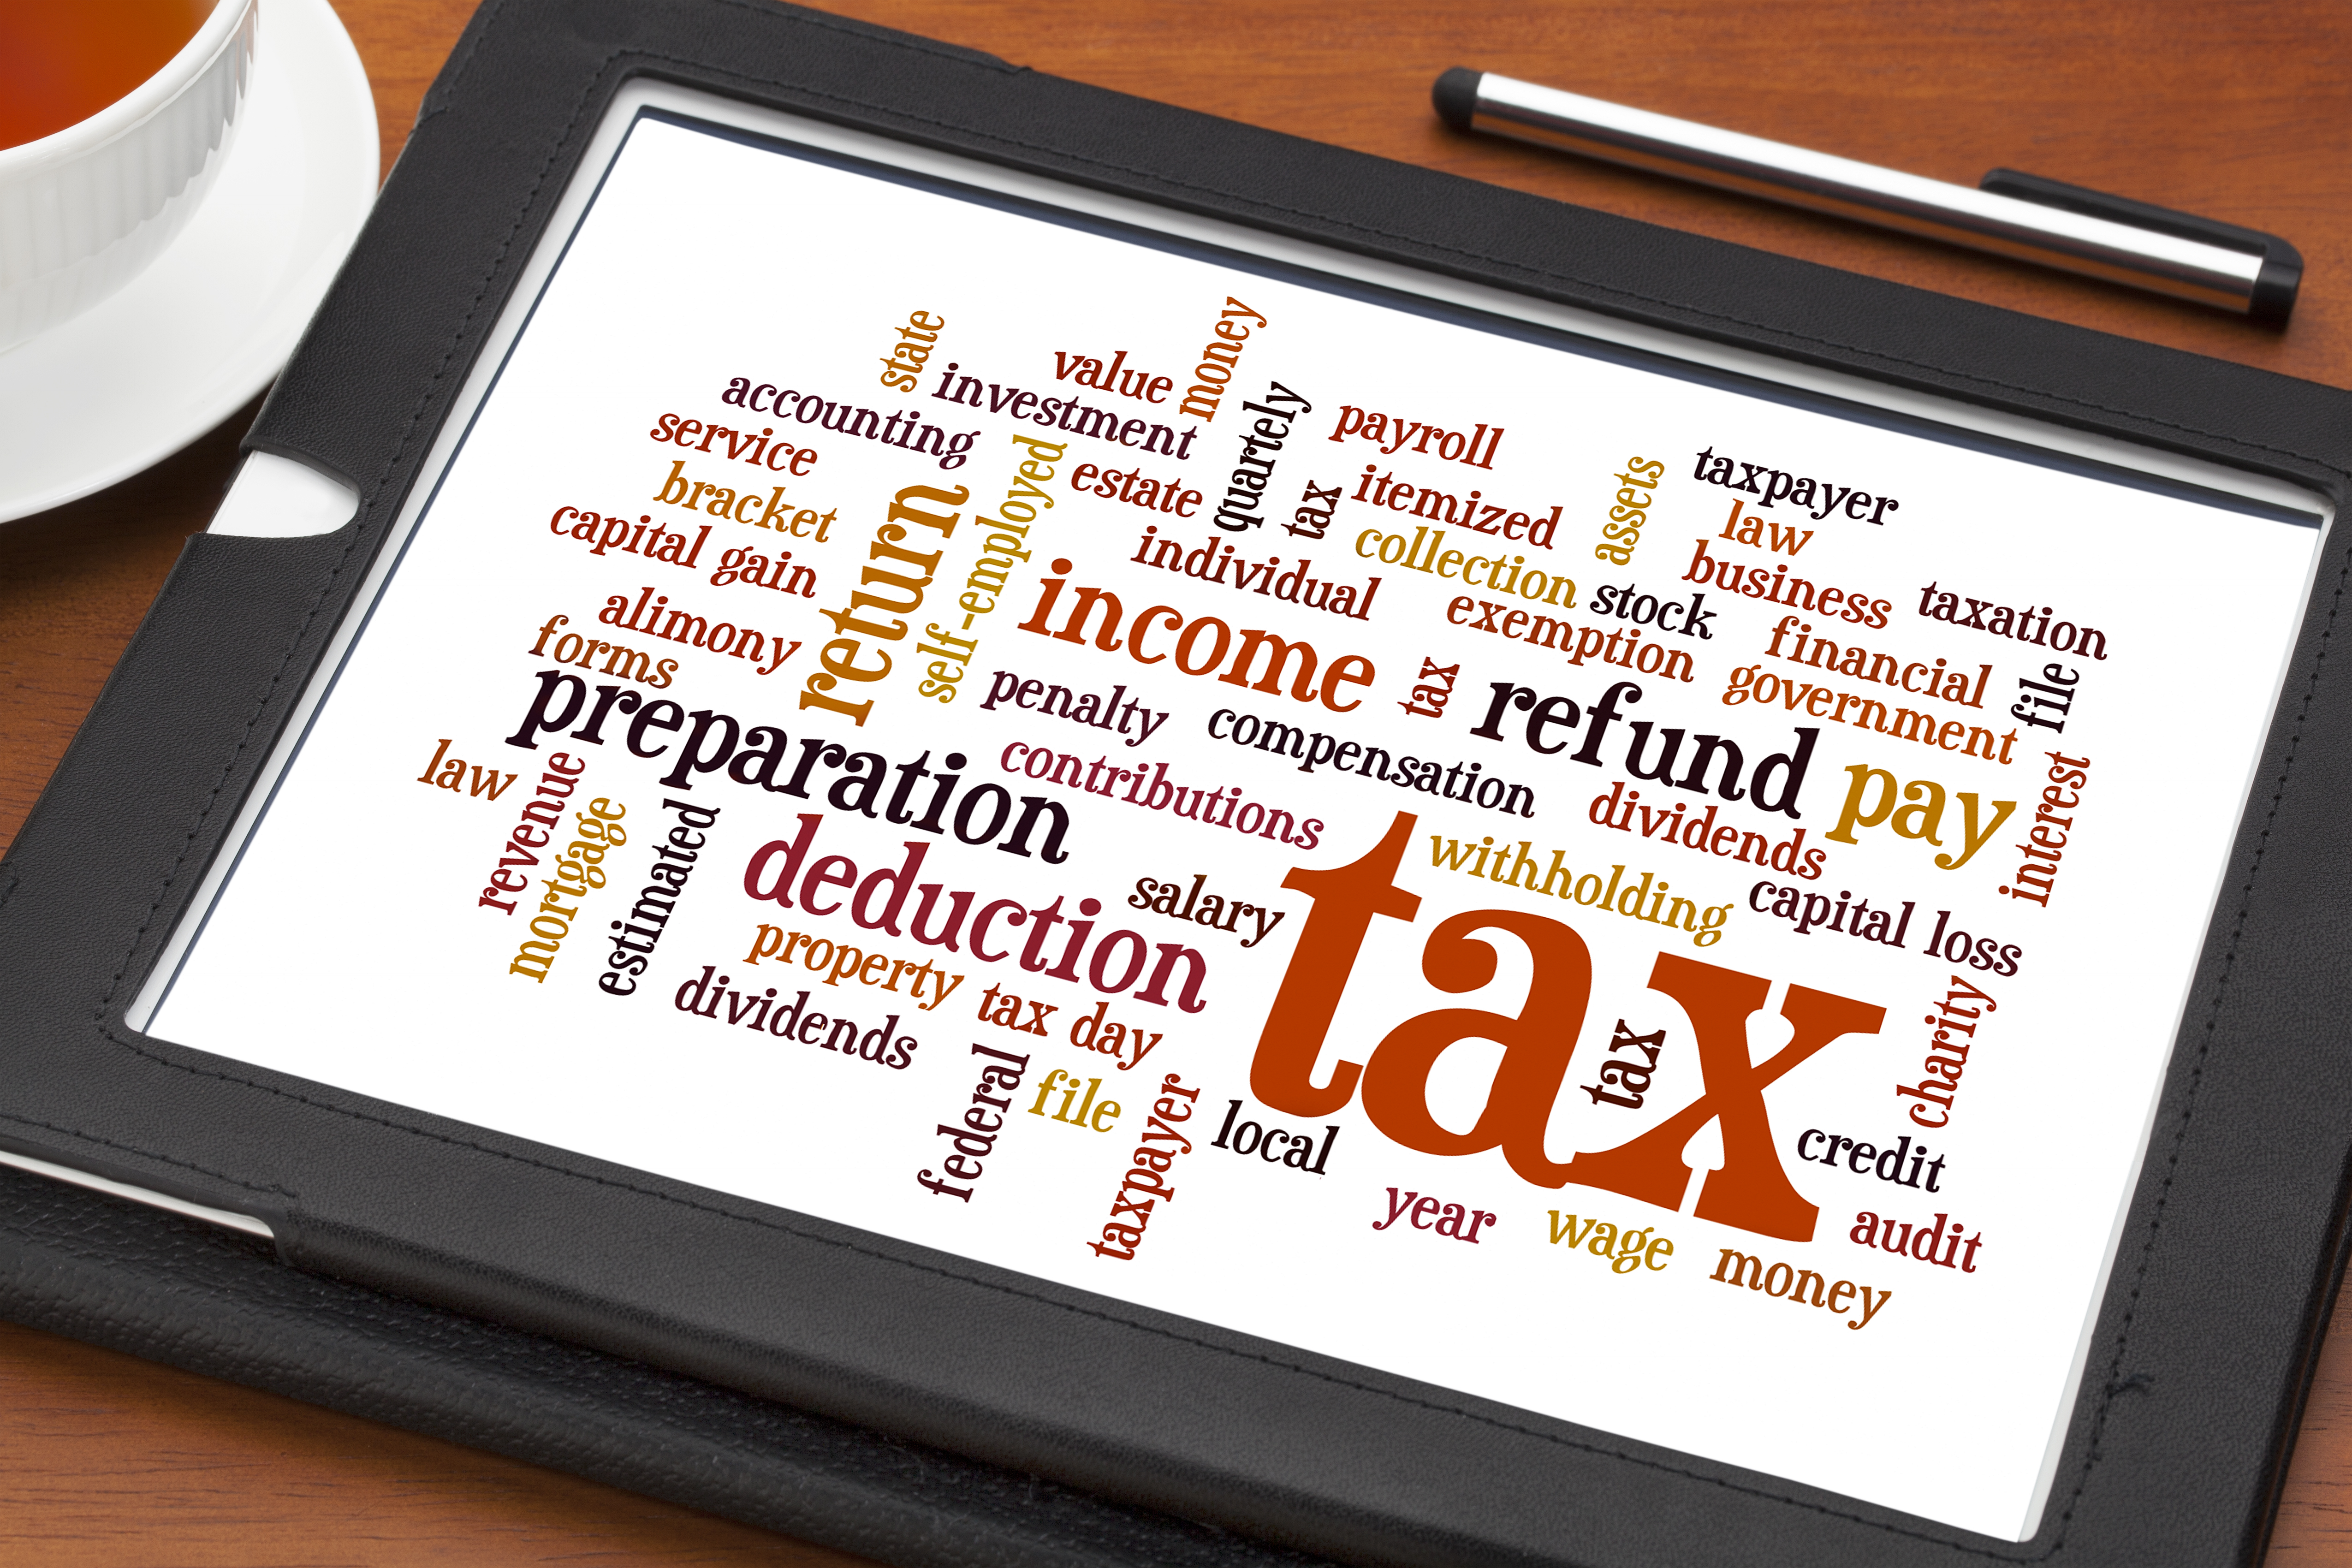 update กฎหมายภาษีอากร 2565 พร้อมตรวจสอบสิทธิประโยชน์ทางภาษี ก่อนยื่นแบบเสียภาษี